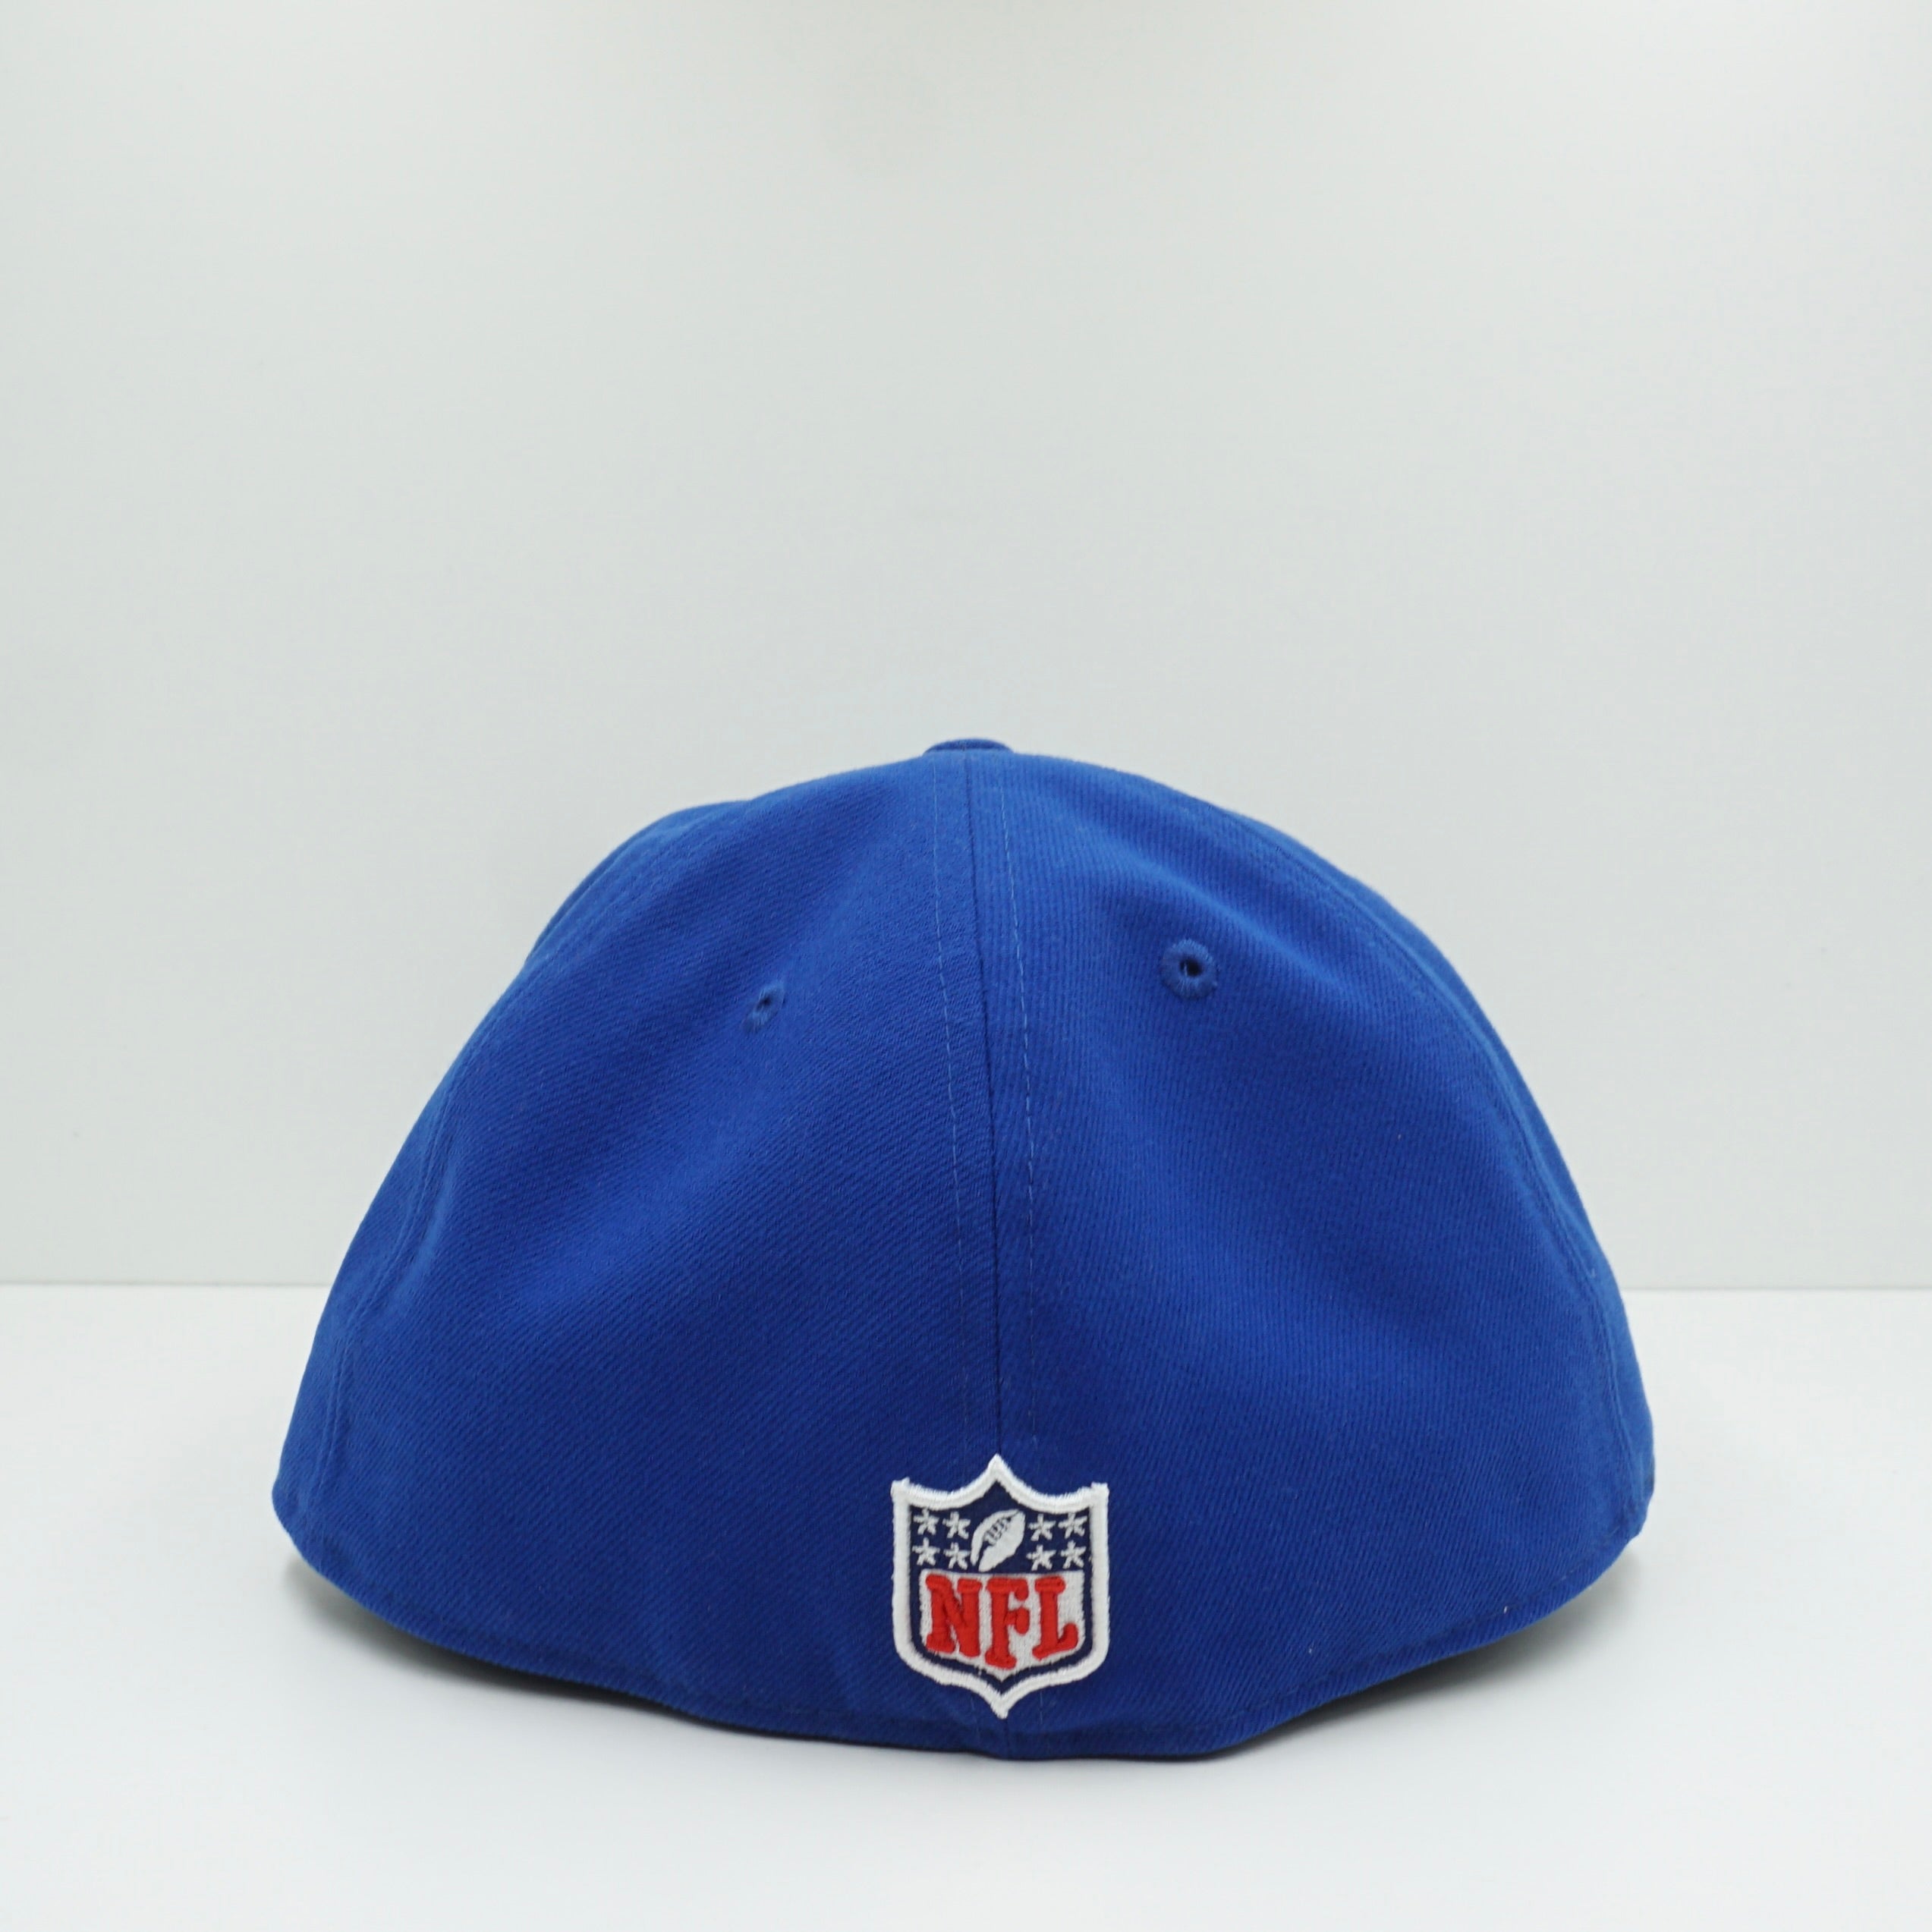 New Era New York Giants Blue White Cap